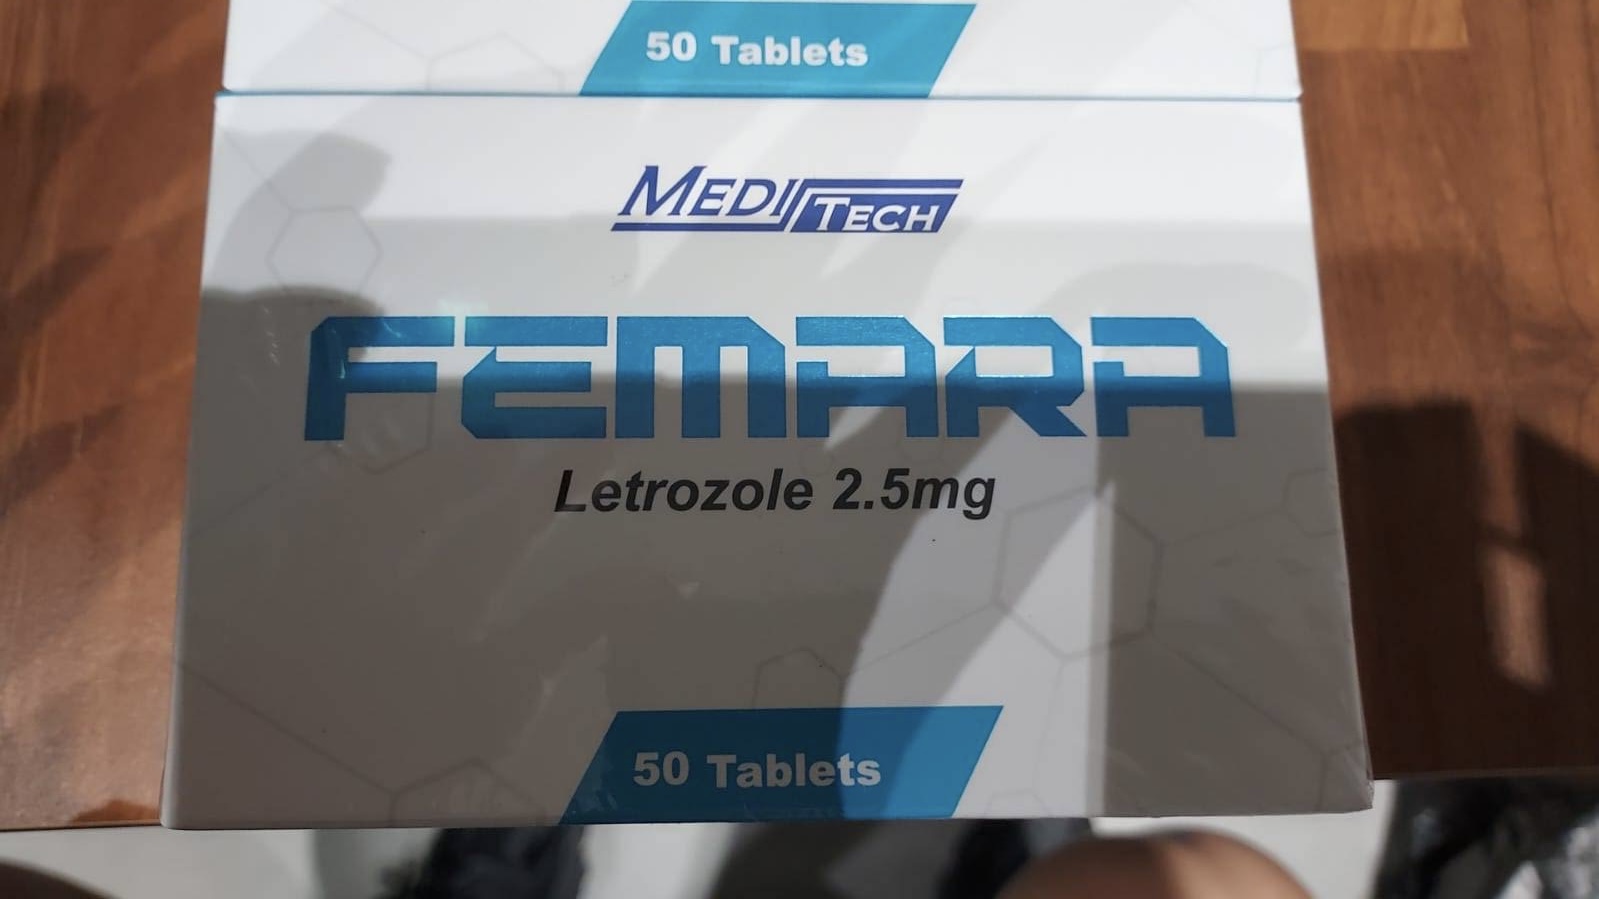 Meditech FEMARA Letrozole 2.5mg 50tablets